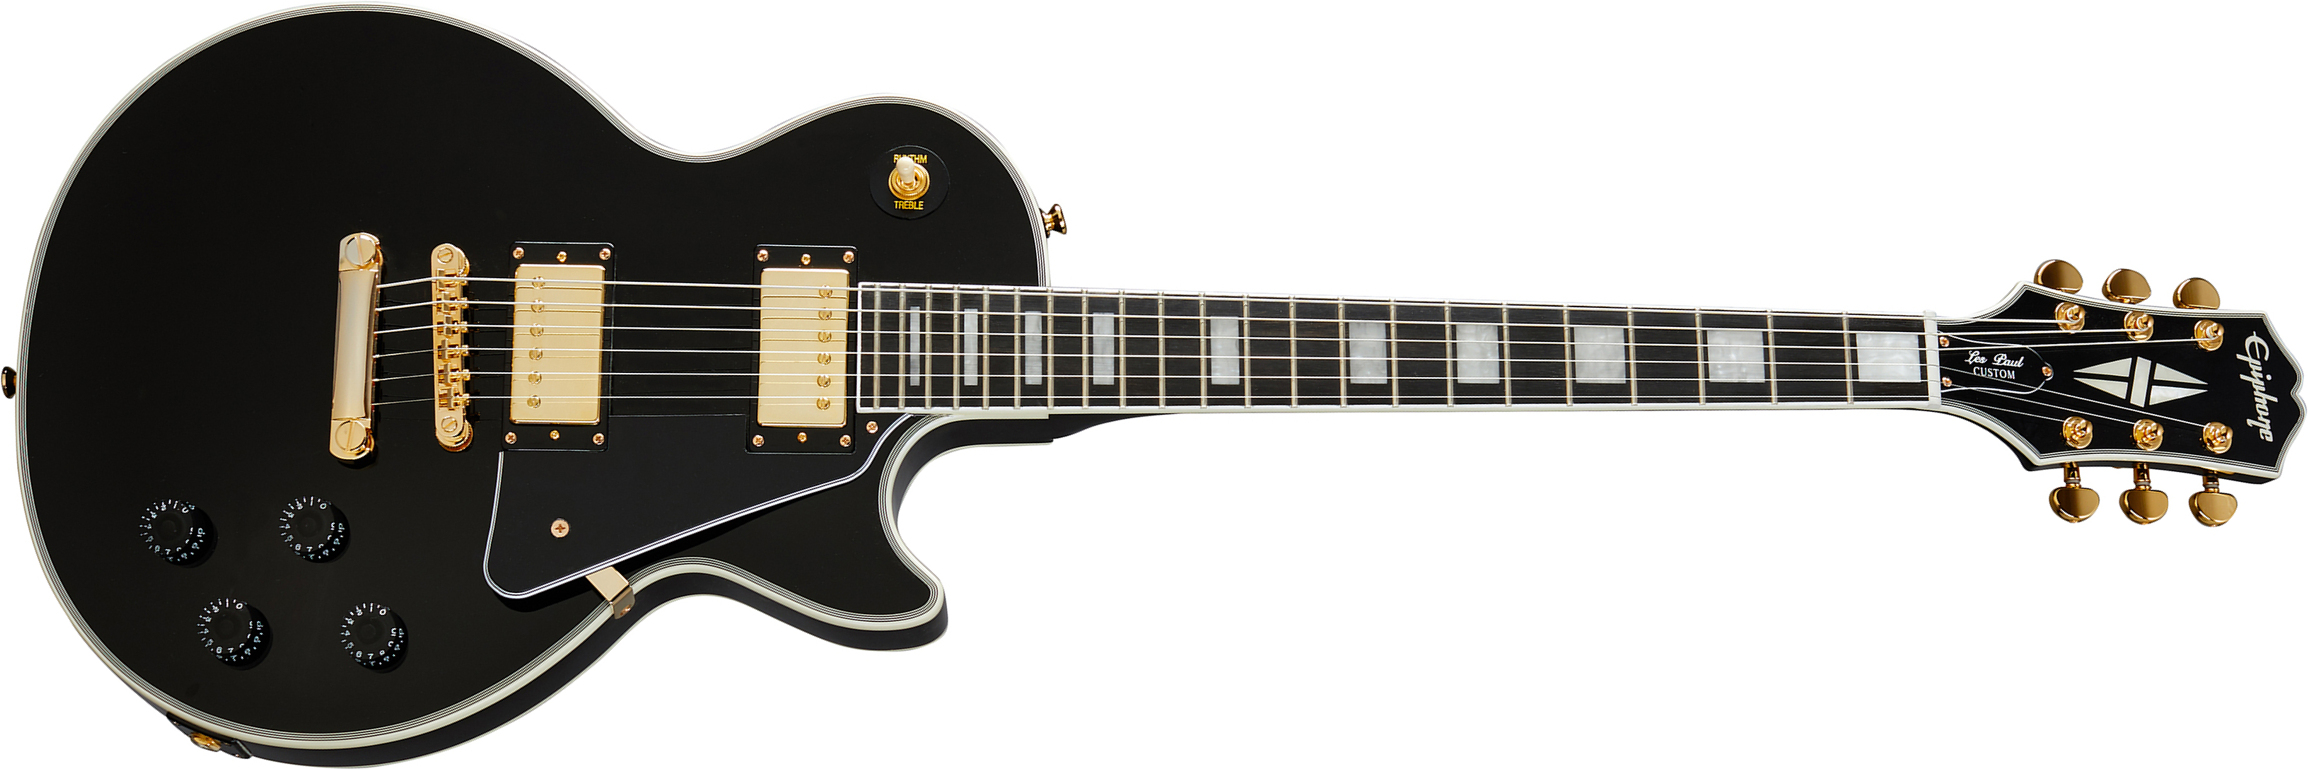 Epiphone Les Paul Custom 2h Ht Eb - Ebony - Single cut electric guitar - Main picture